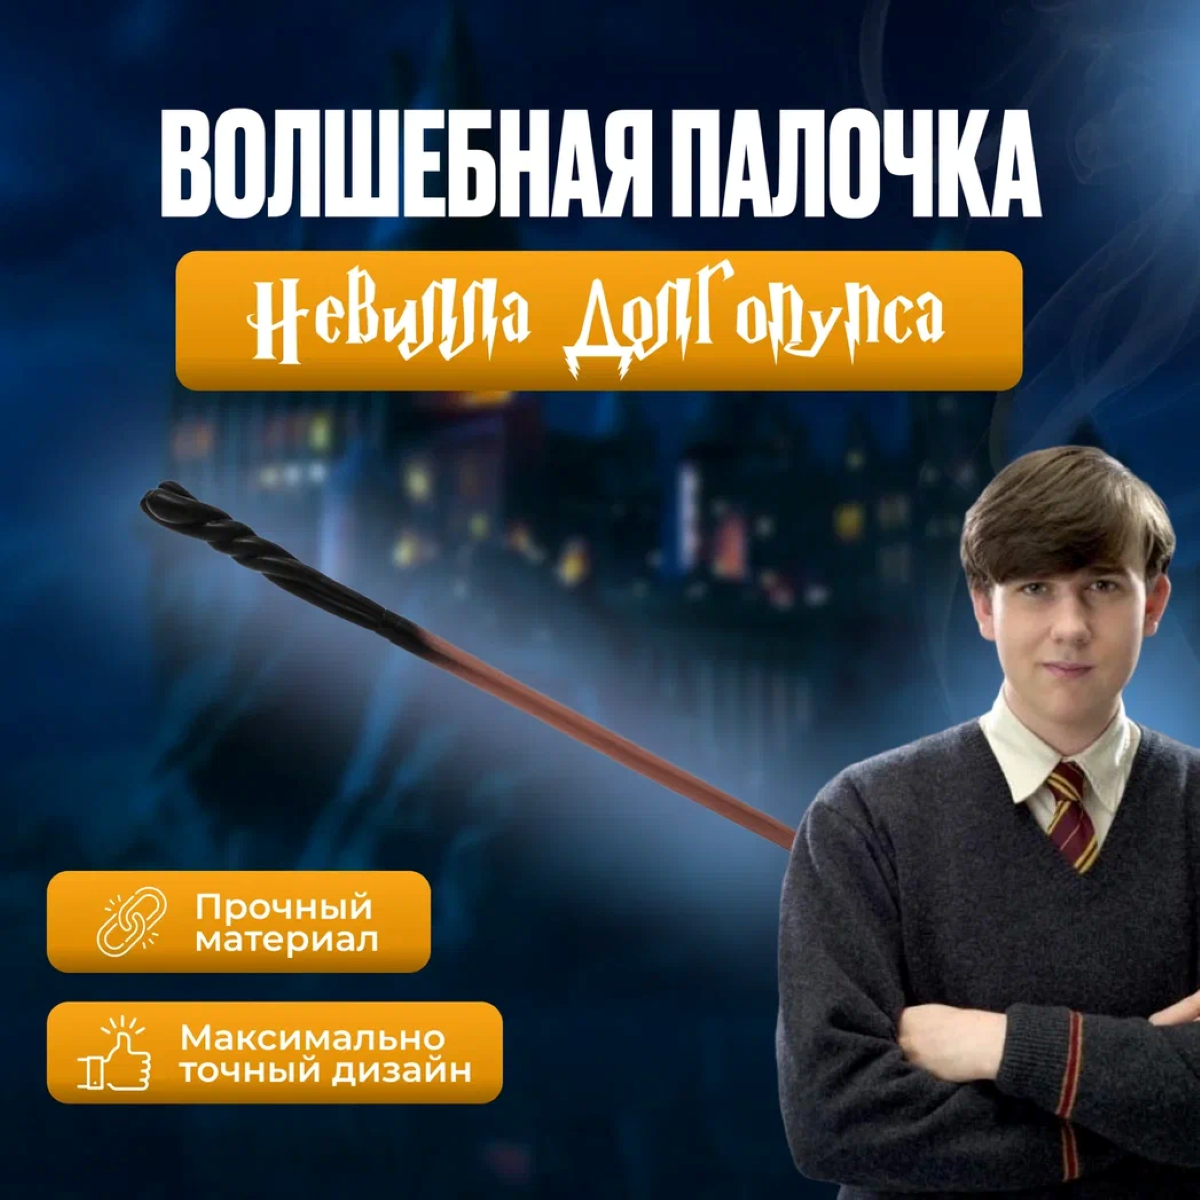 Волшебная палочка Fantasy Earth Harry Potter Невилла Долгопупса